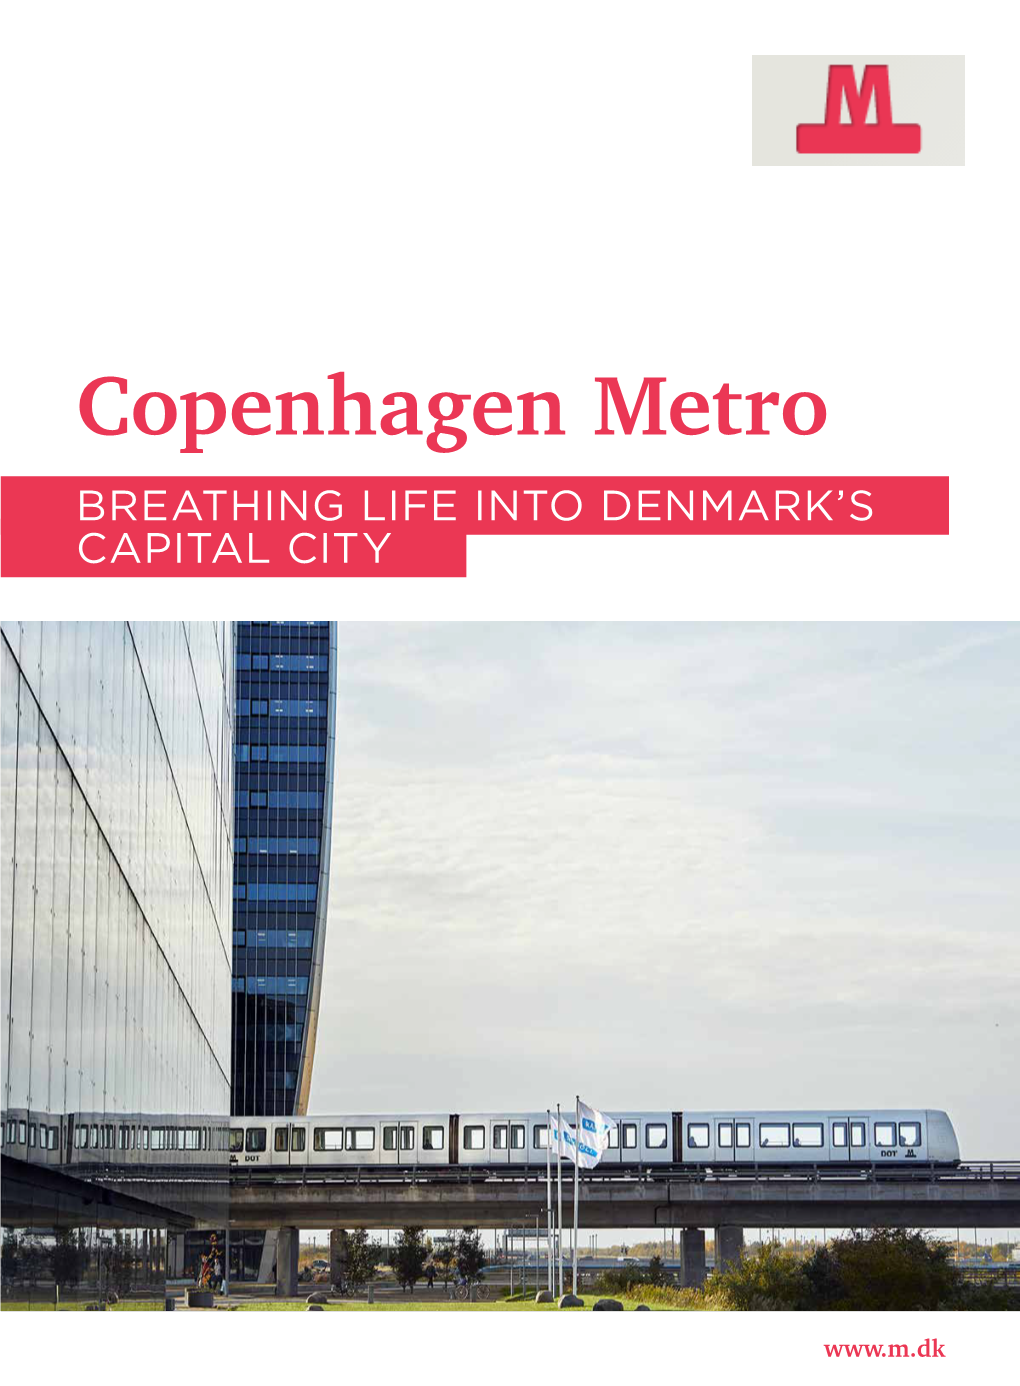 Copenhagen Metro BREATHING LIFE INTO DENMARK’S CAPITAL CITY